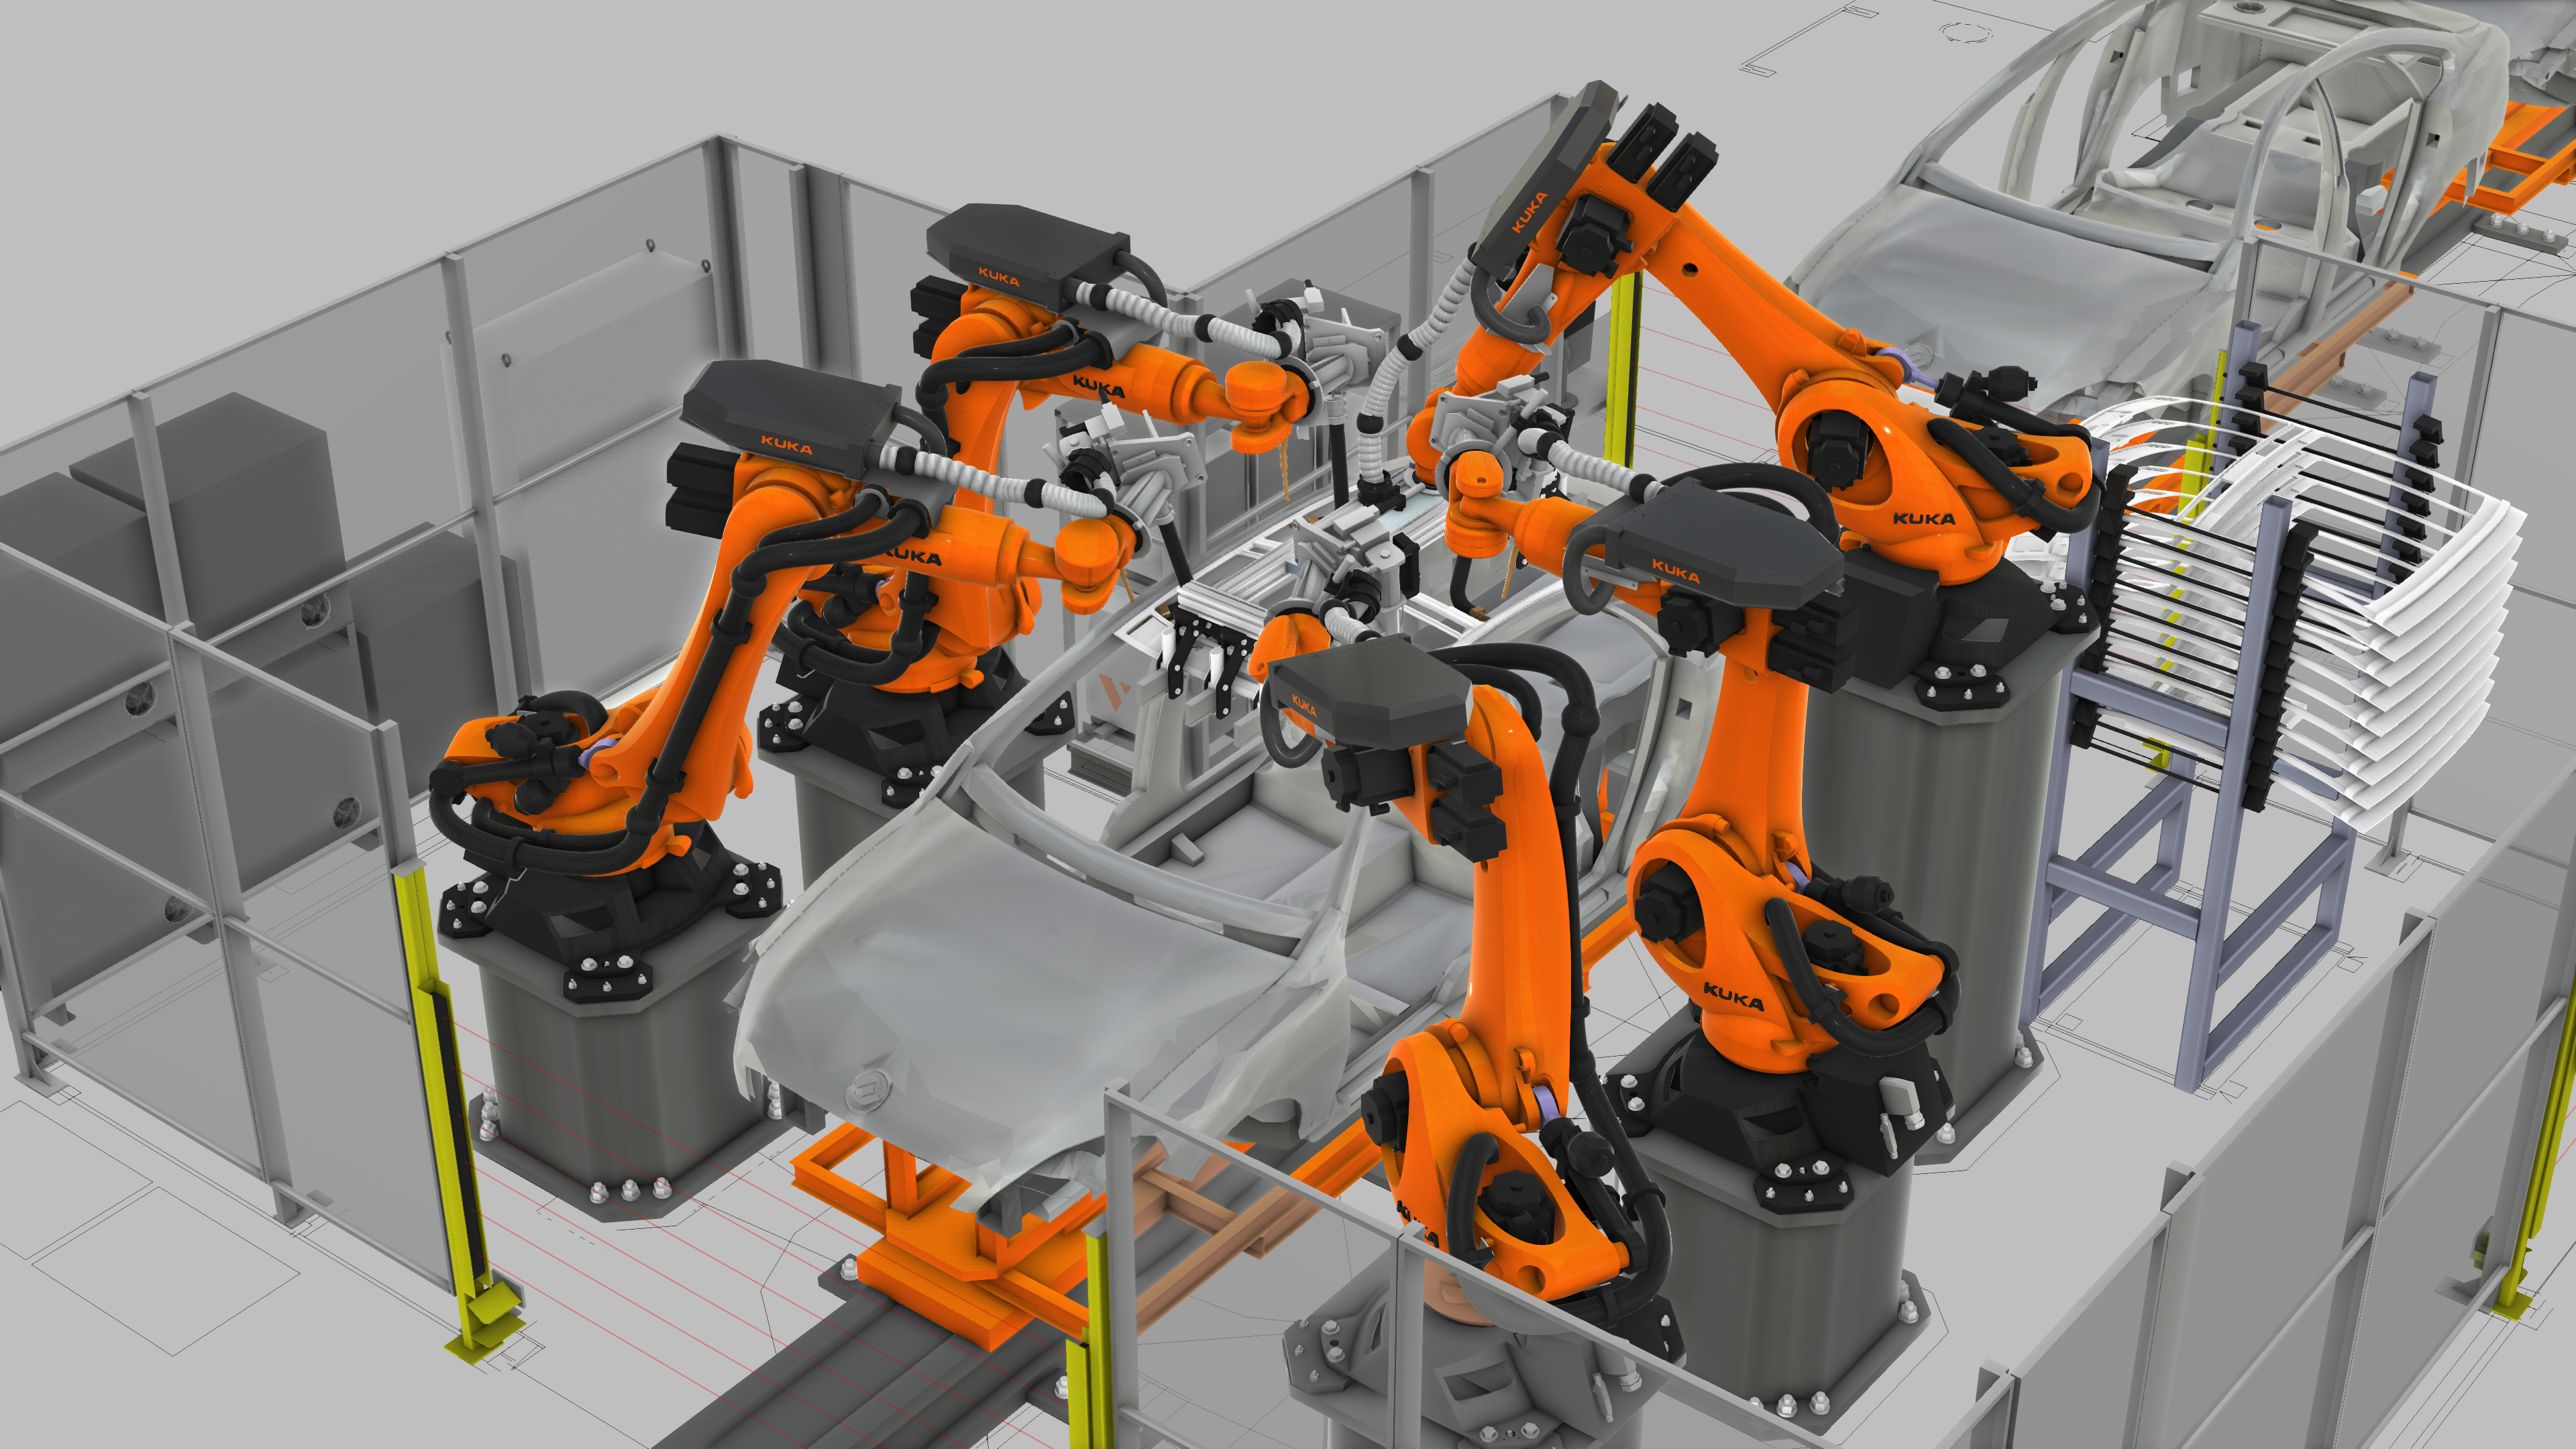 Автоматизация и роботизация технология 8 класс. Kuka kr 300. Мехатроника и робототехника kuka. Роботизированный манипулятор kuka. Kuka x650.